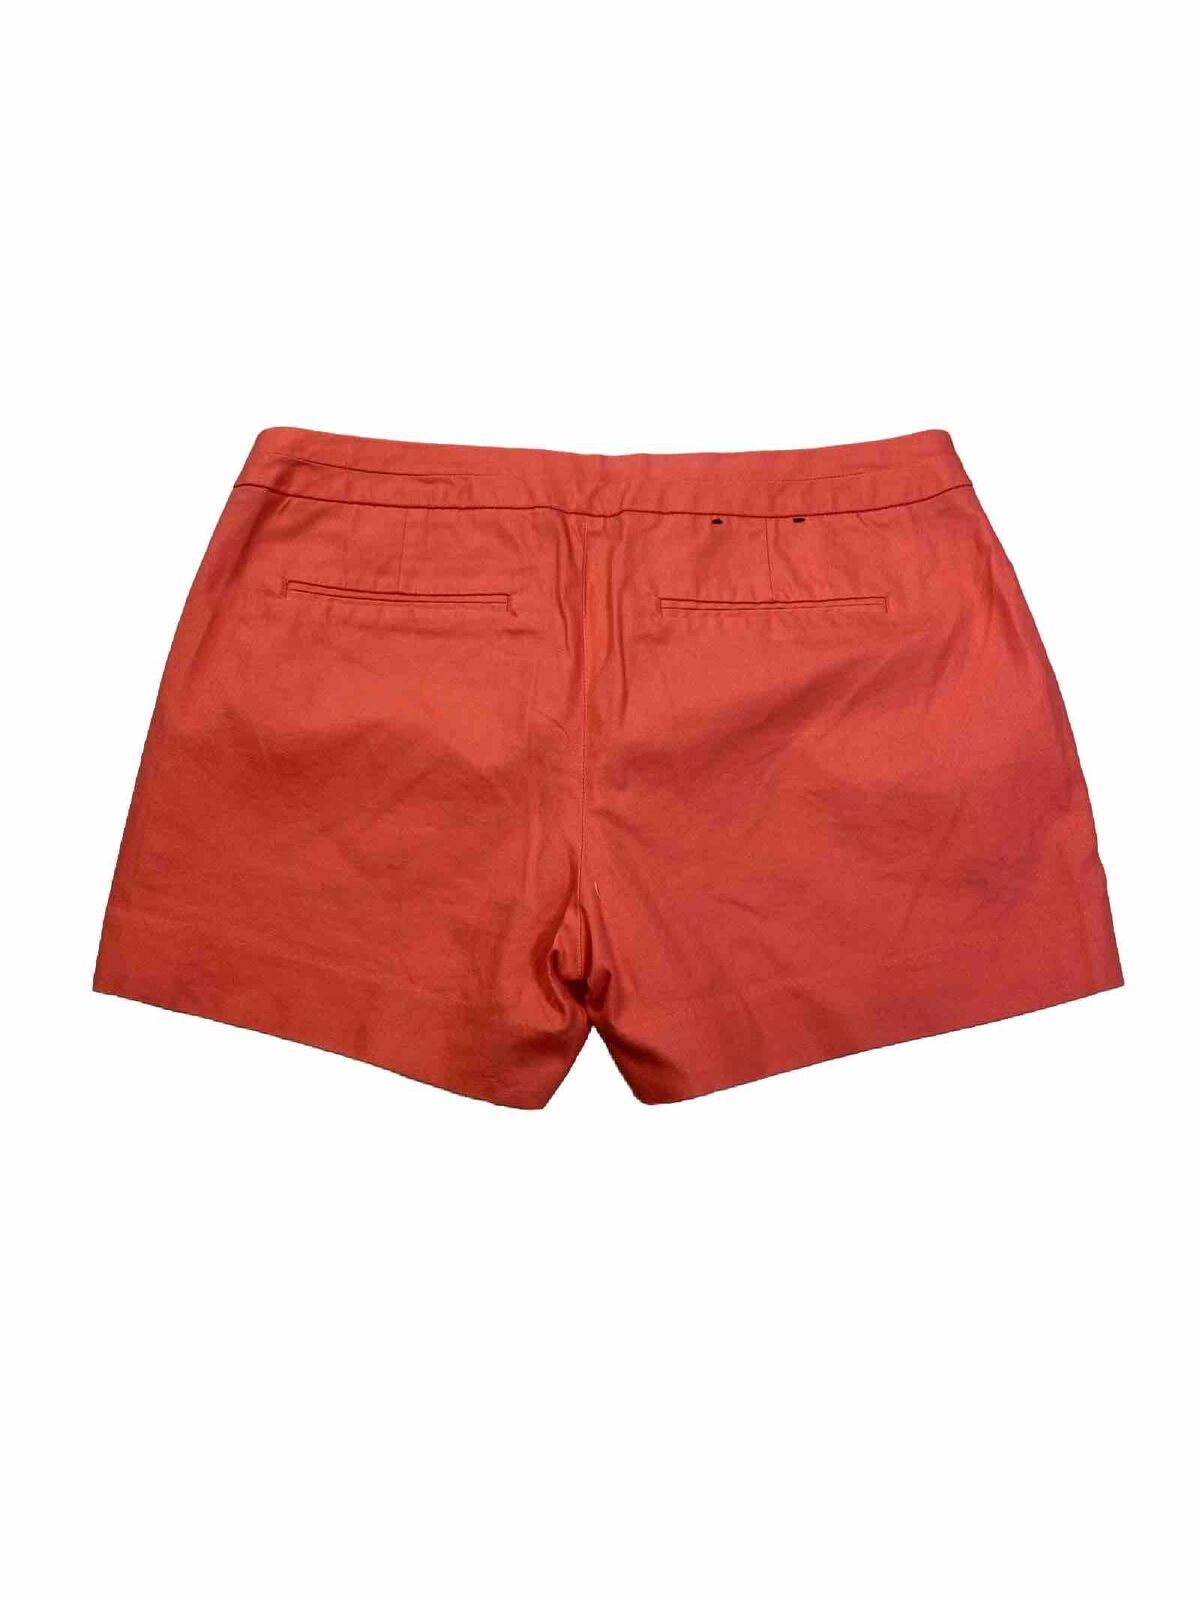 Banana Republic Women's Red/Coral Hampton Fit Casual Shorts - 4